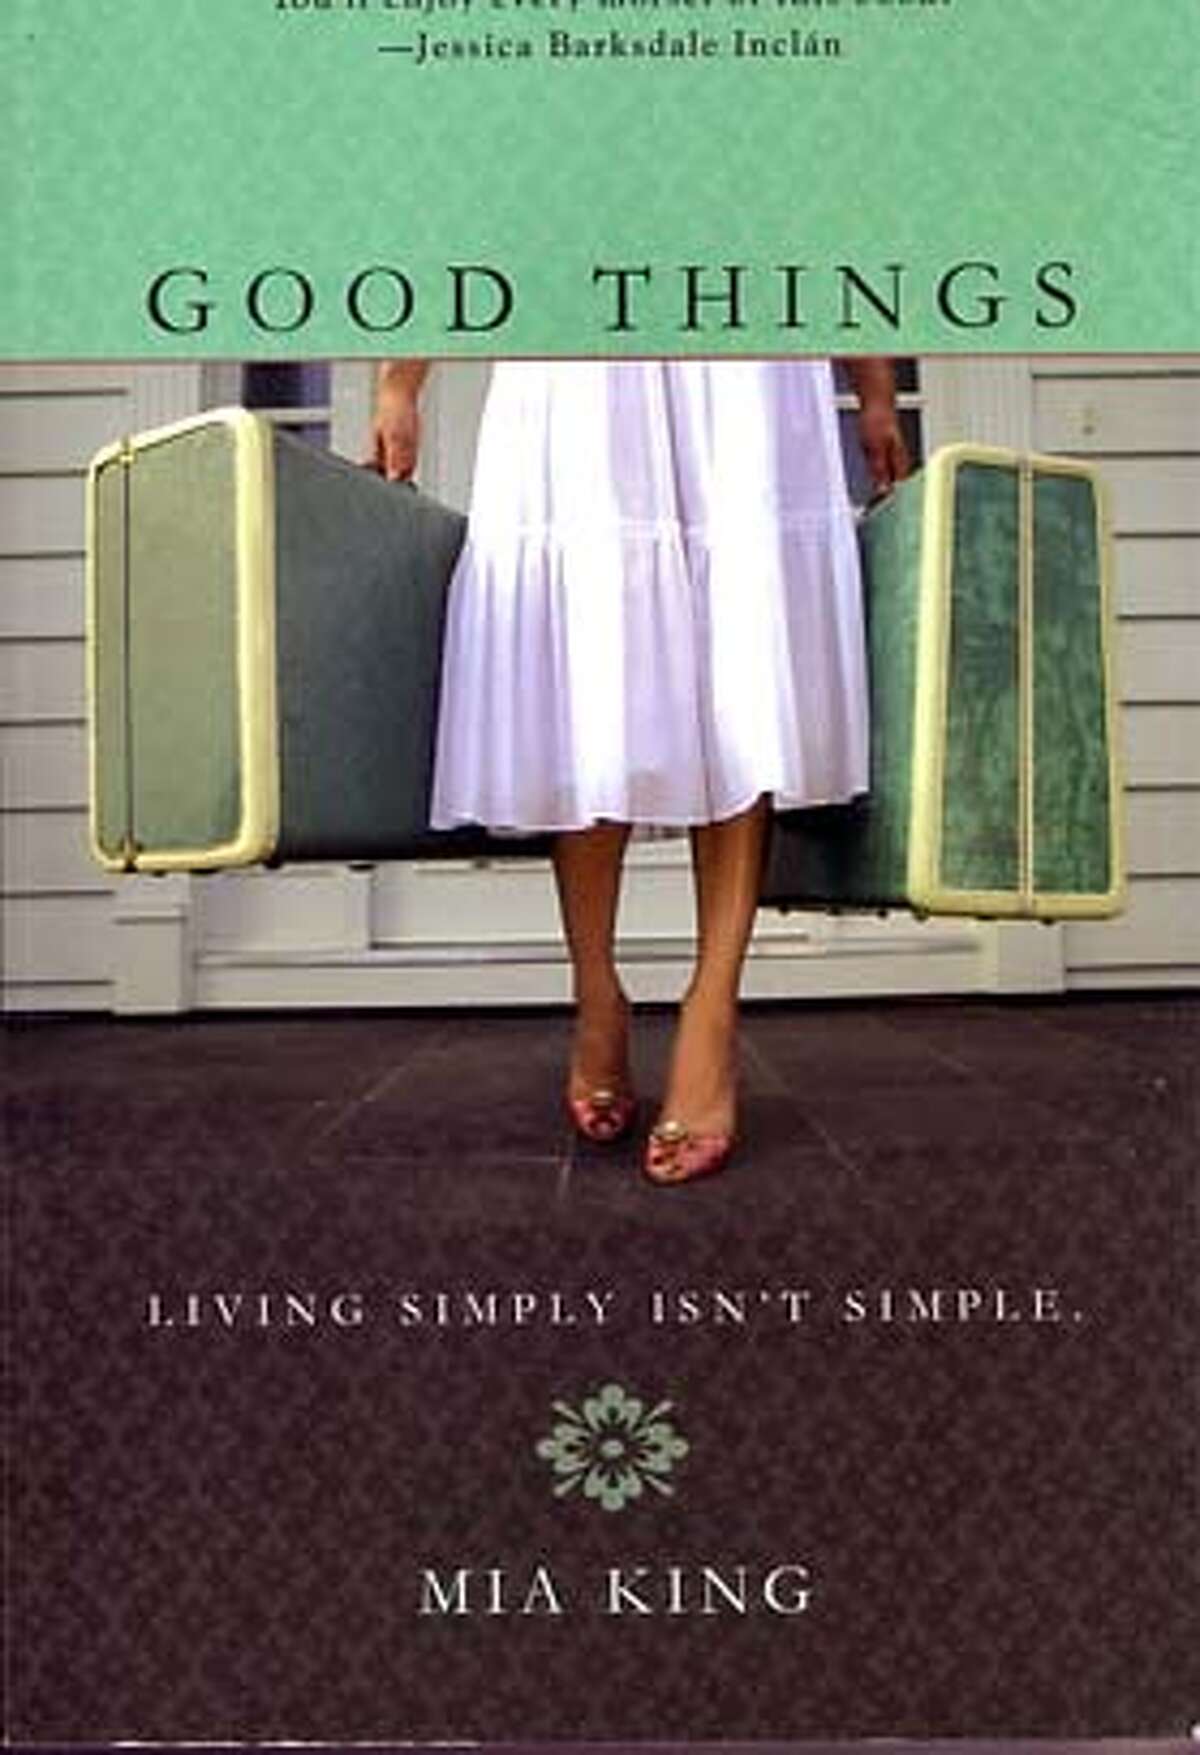 "Good Things" by Darien Hsu Gee (writing as Mia King)